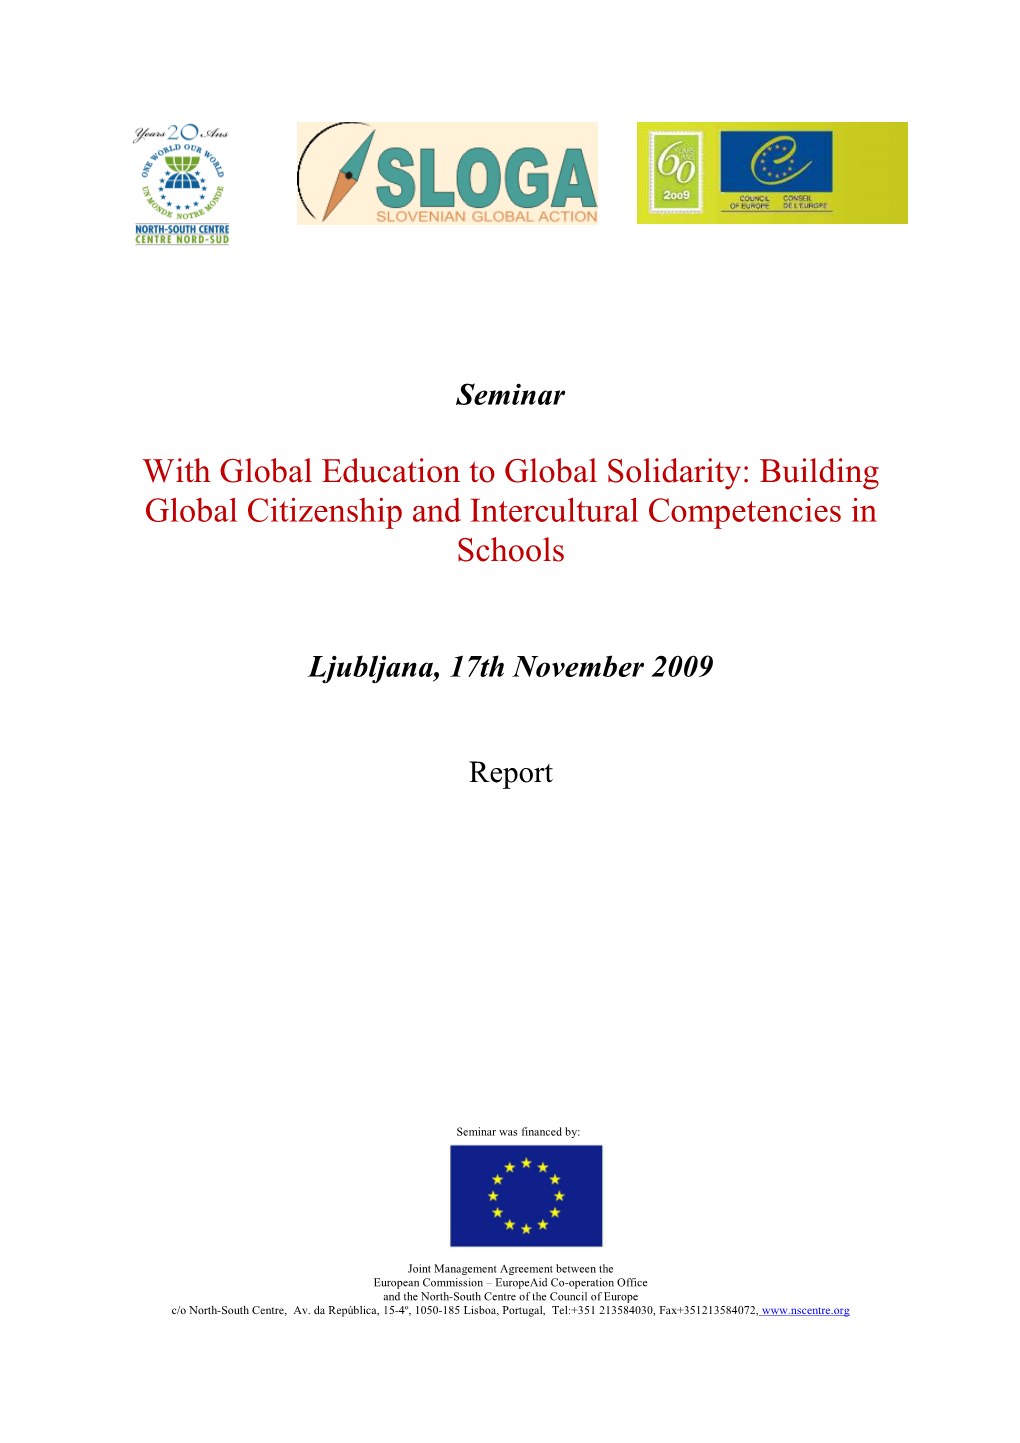 Building Global Citizenship and Intercultural Competencies in Schools